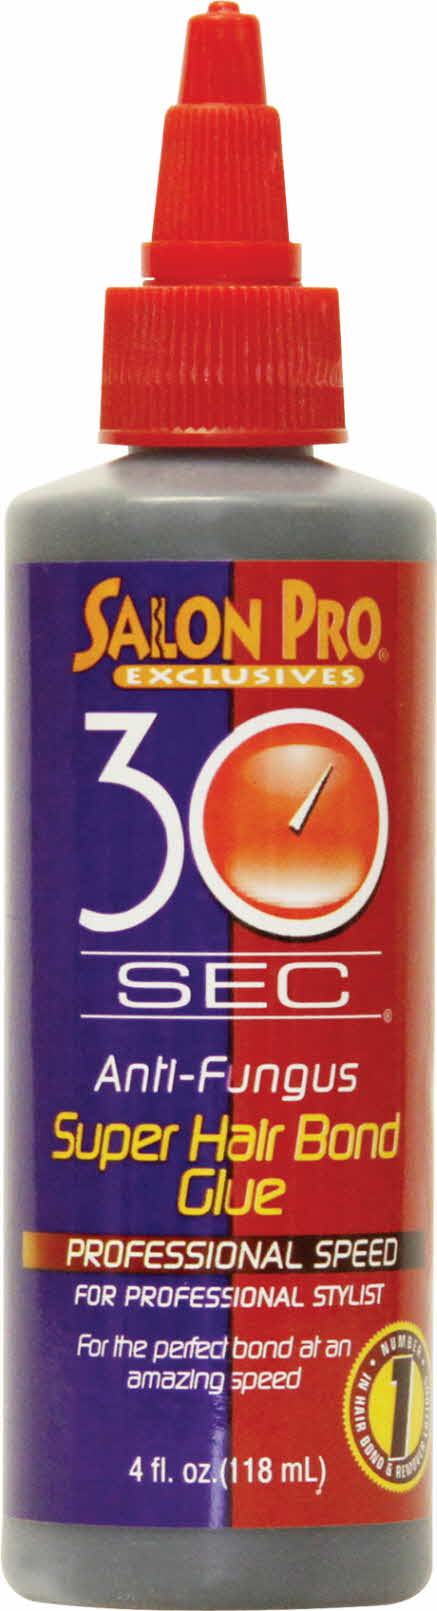 Salon Pro 30 Sec Super Hair Bond Glue 4oz